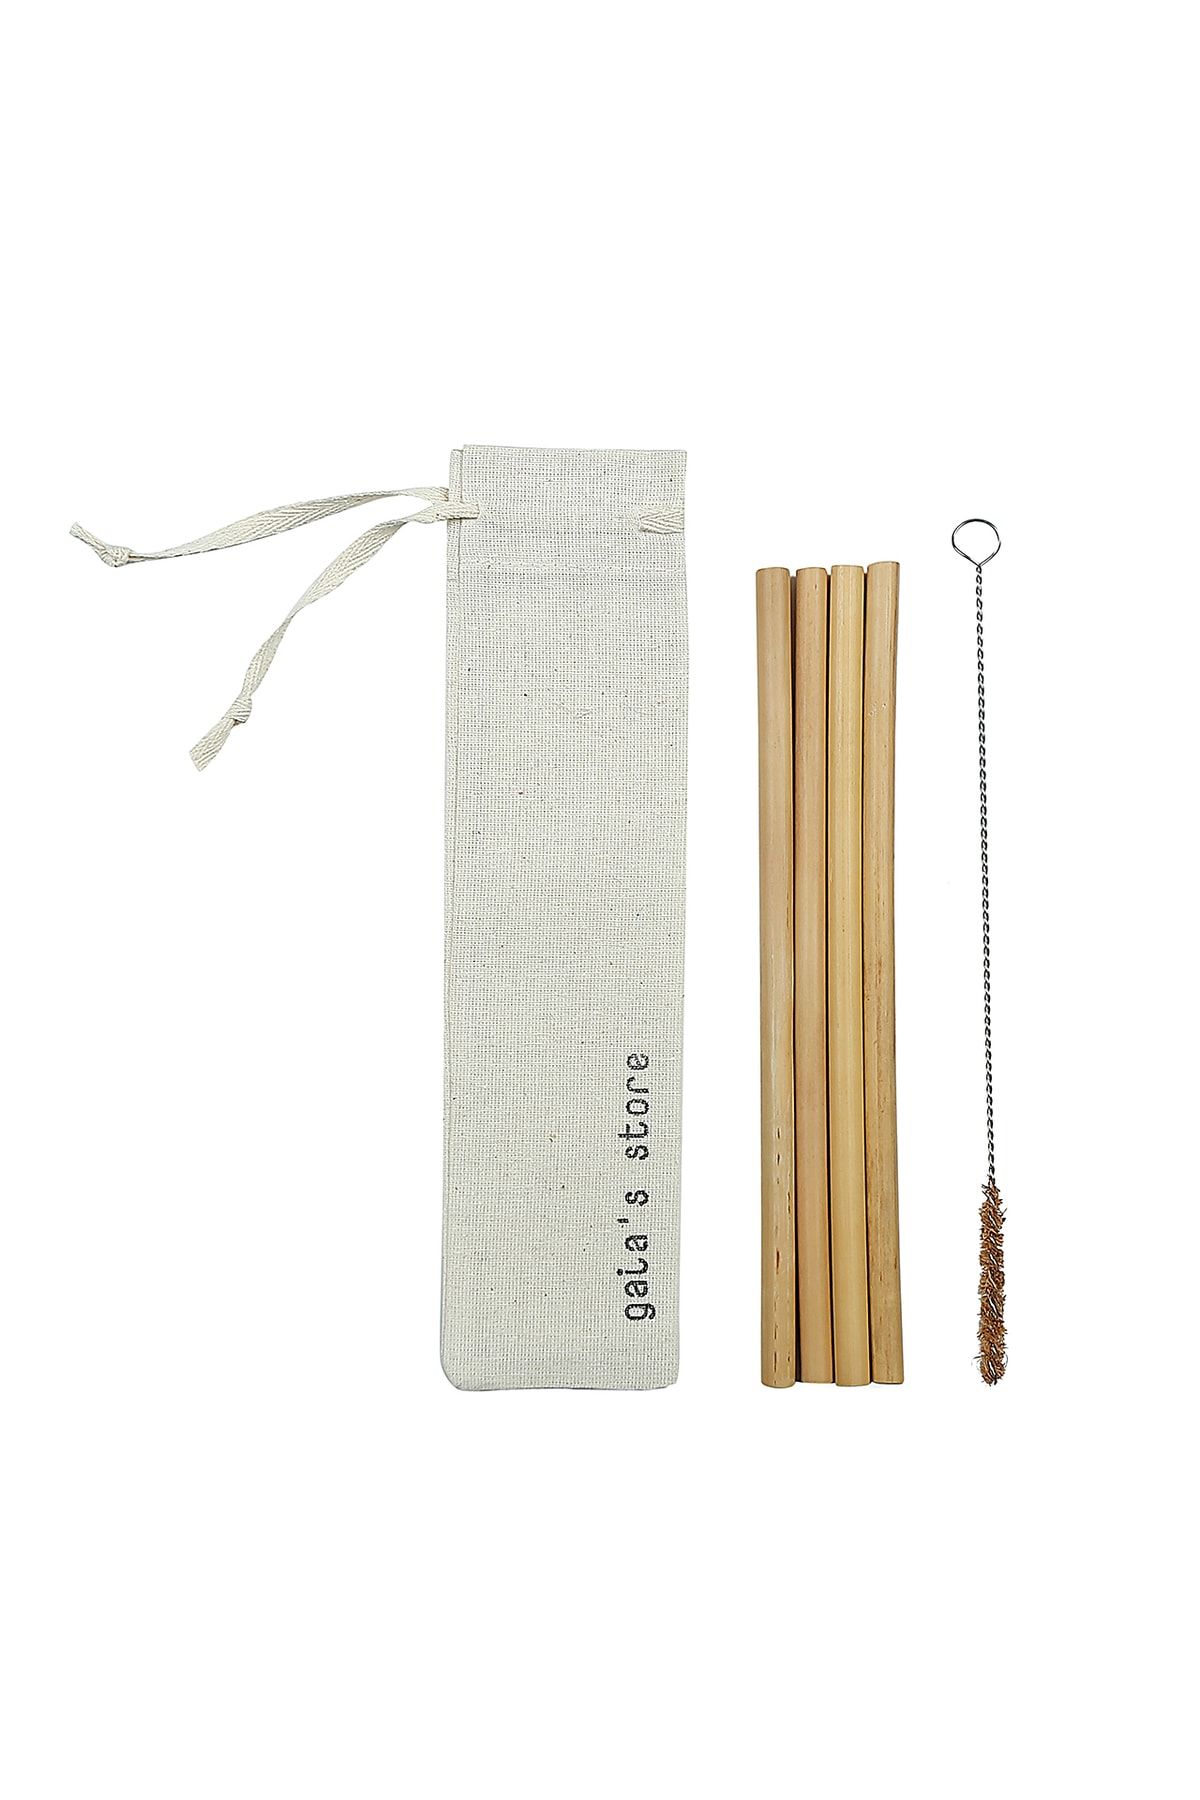 Gaia's Store Bambu Pipet Seti 4'lü & Temizleme Fırçası / Bamboo Straws